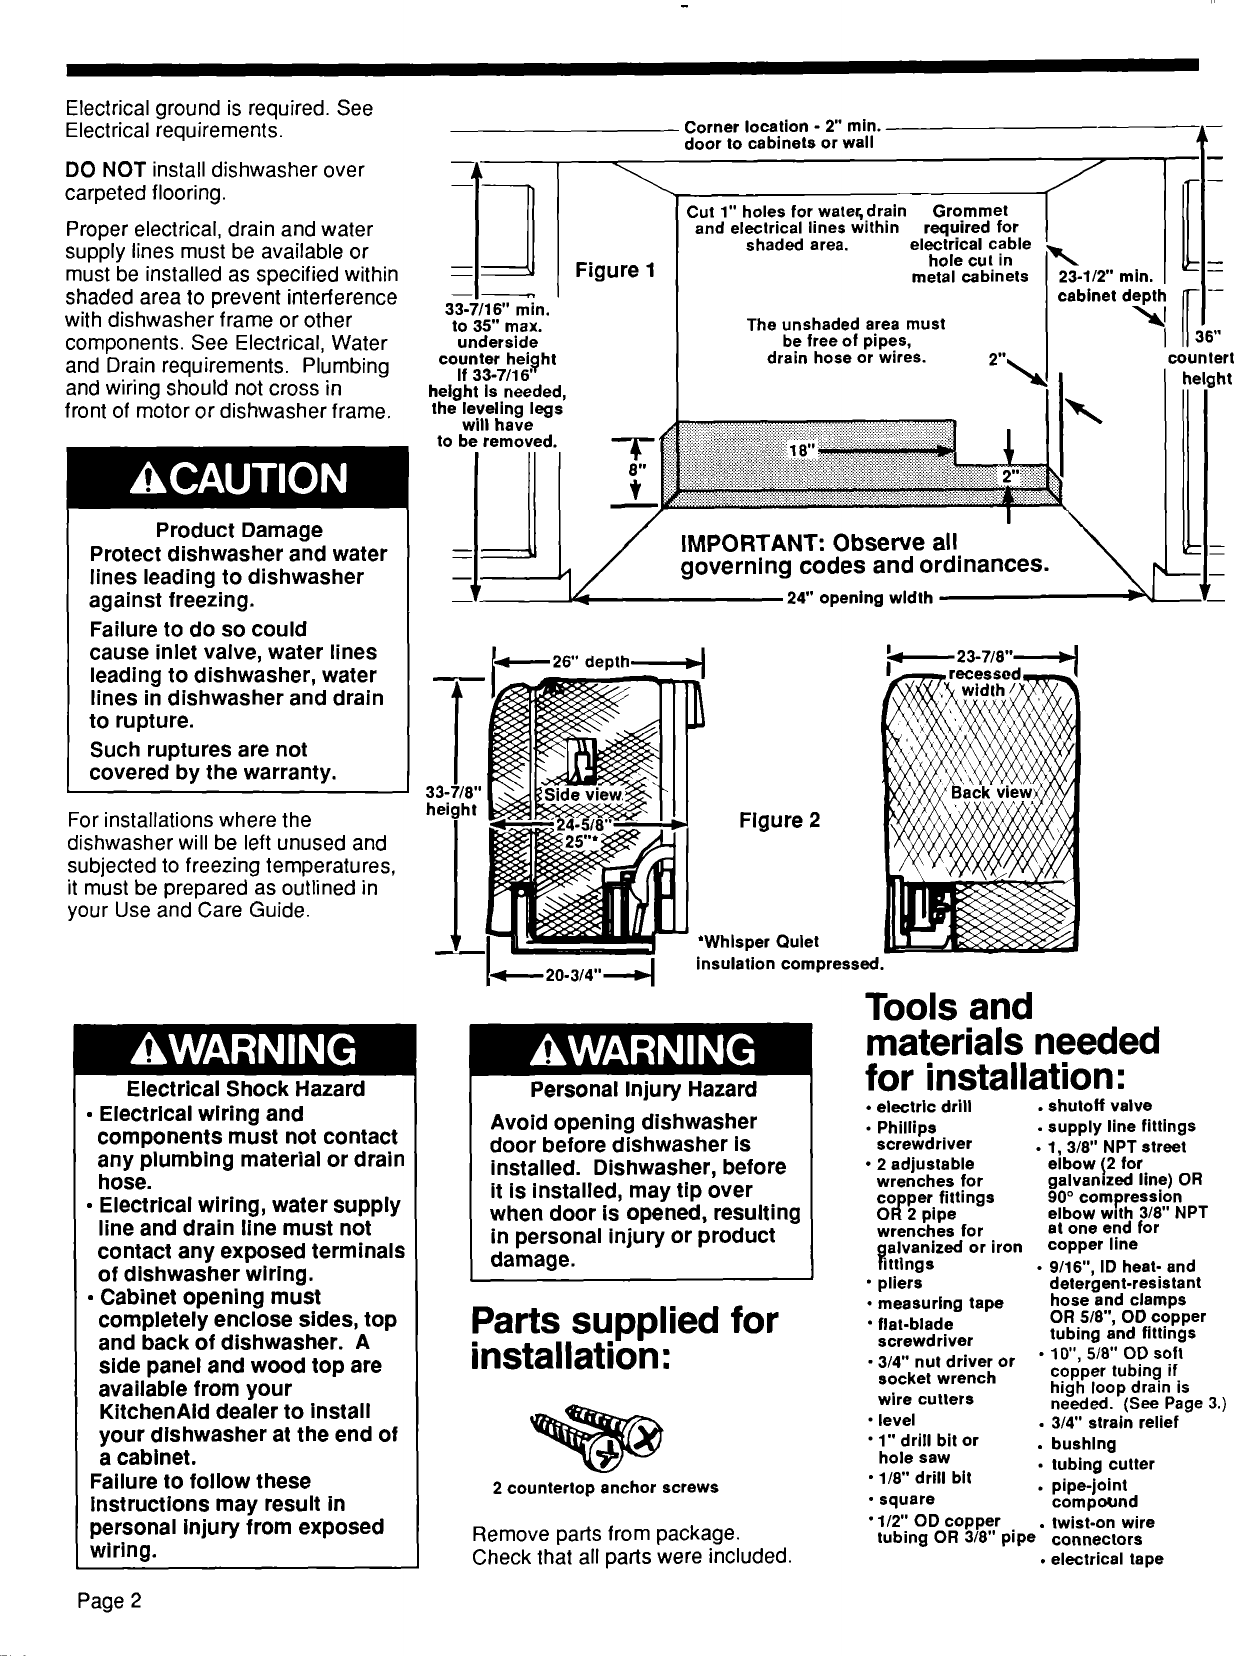 Page 2 of 8 - Kitchenaid KUDI220T5 User Manual  DISHWASHER - Manuals And Guides L0907467